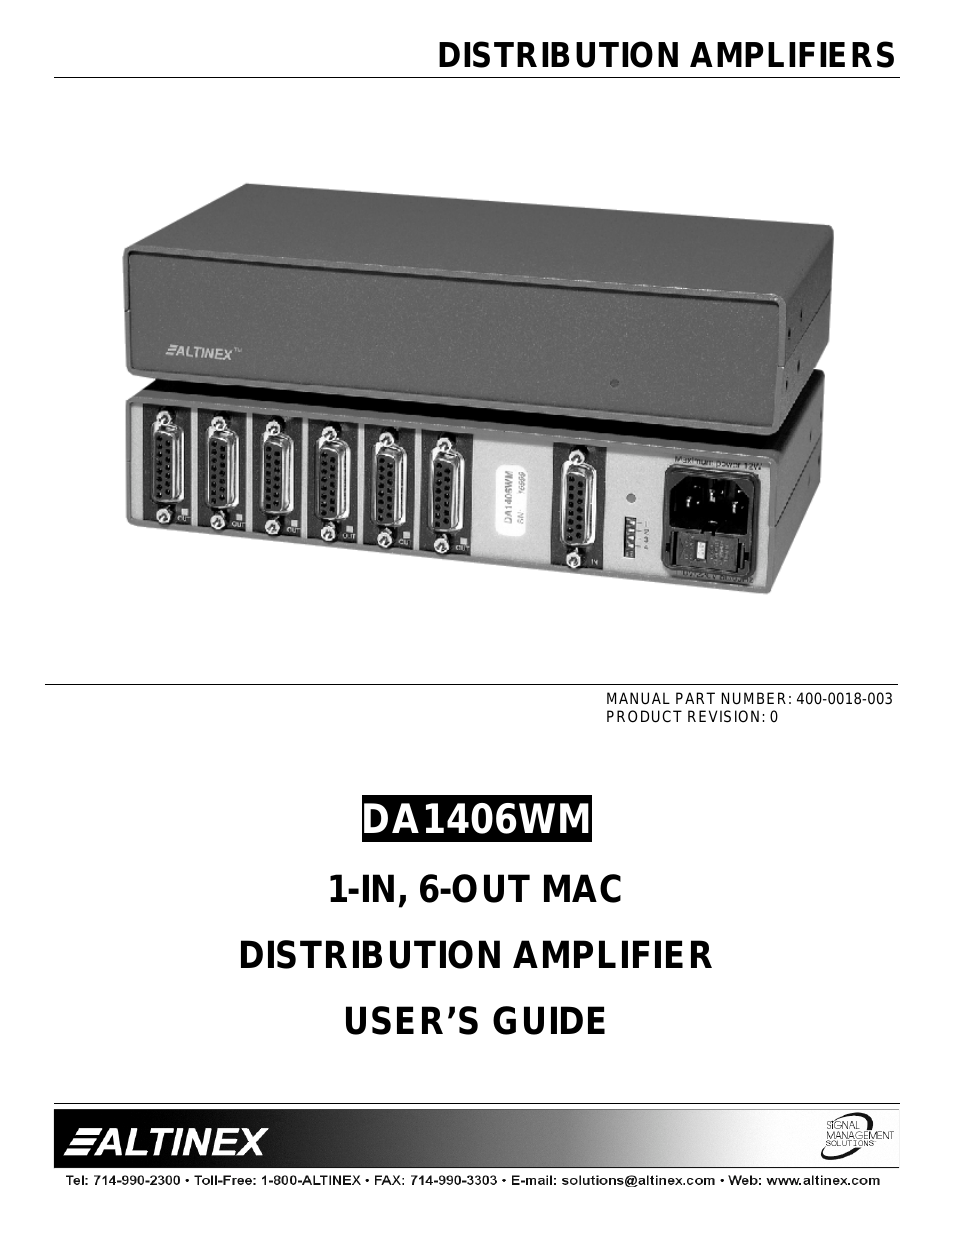 6 Out Mac Distribution Amplifier DA1406WM